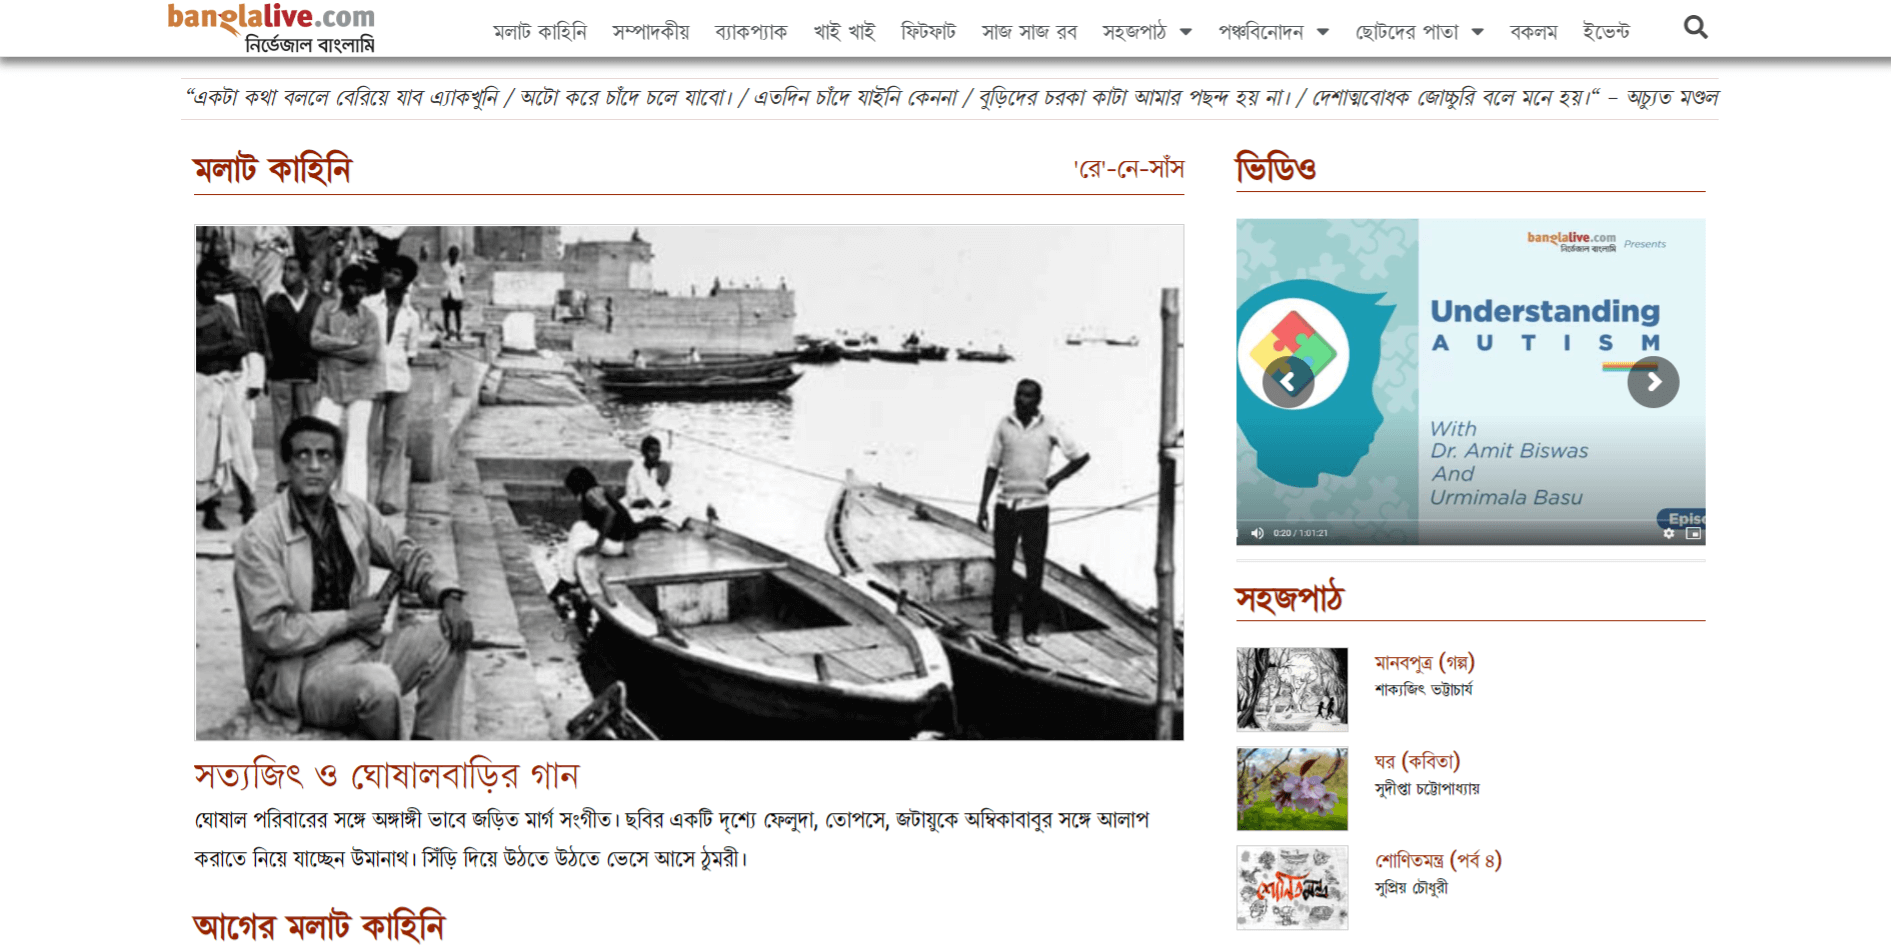 Bengali Newspapers 16 Banglalive.com Website